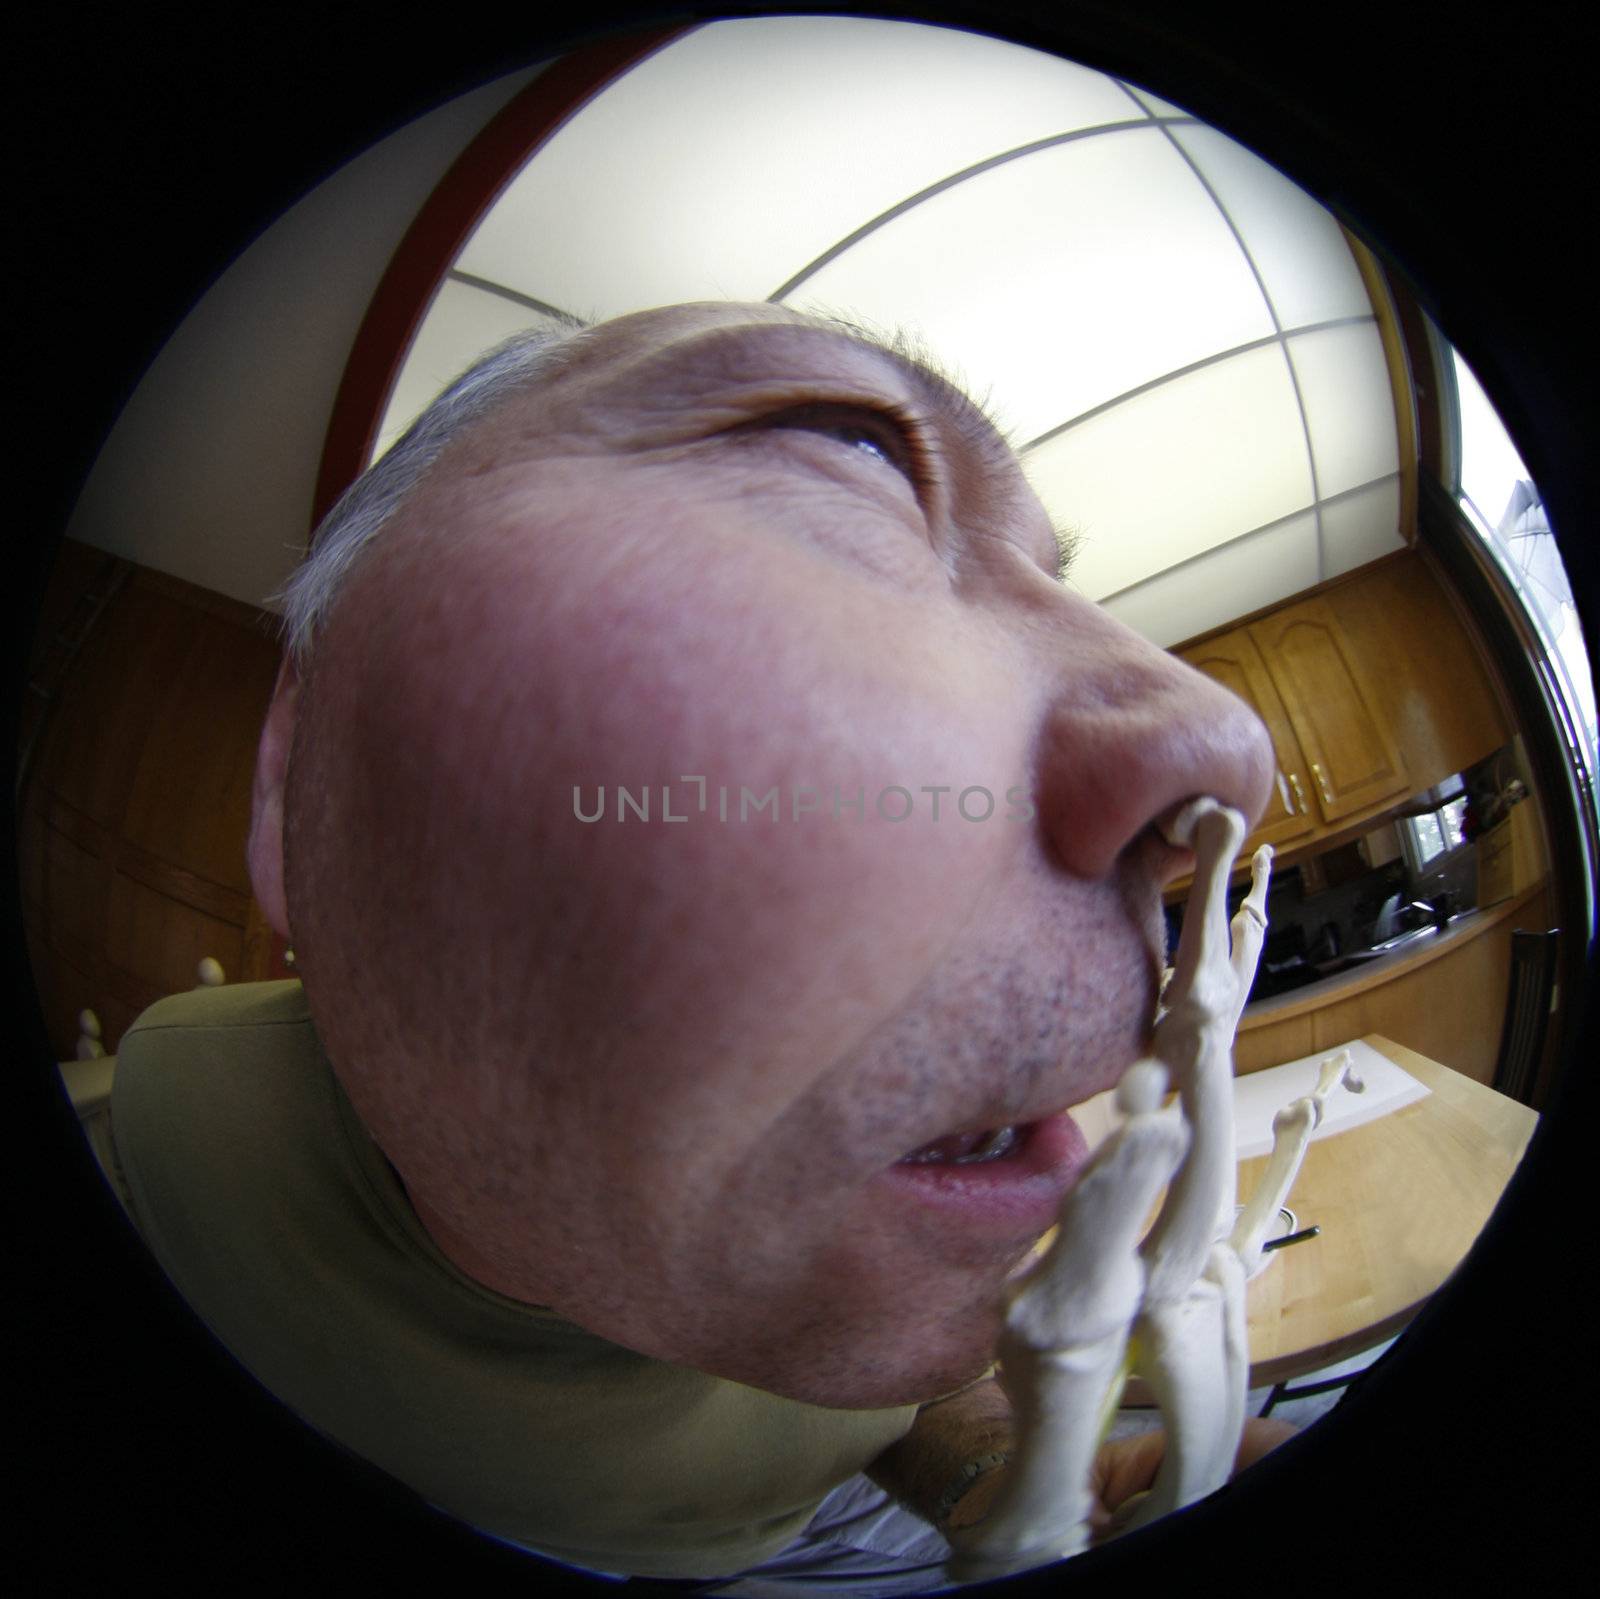 Pick my nose by Imagecom